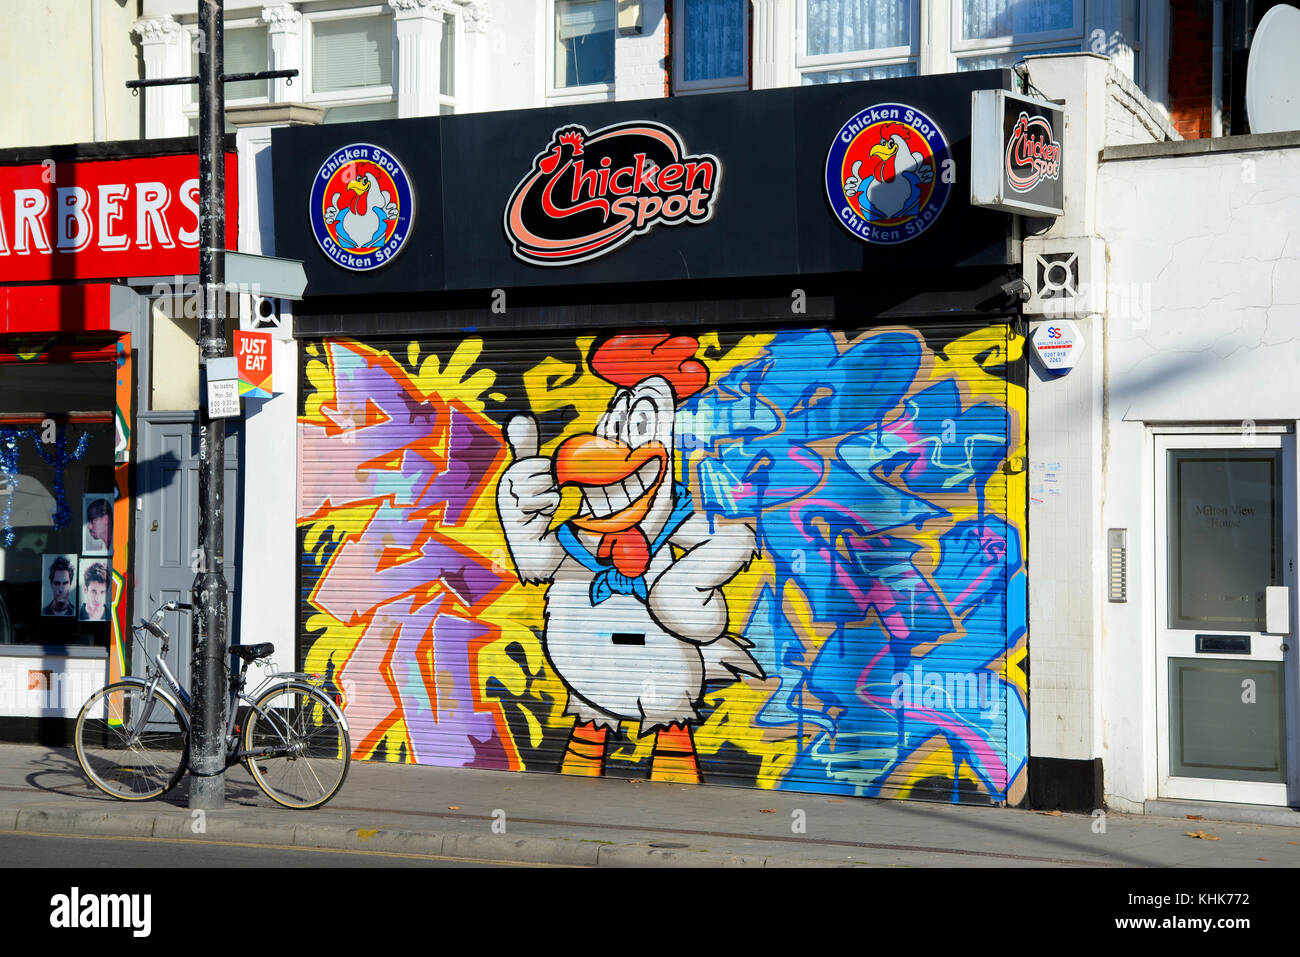 Huhn Spot fast food take away mit großen Graffiti Kunst Streetart Kunstwerke sprühte auf die geschlossene Blende. Stockfoto